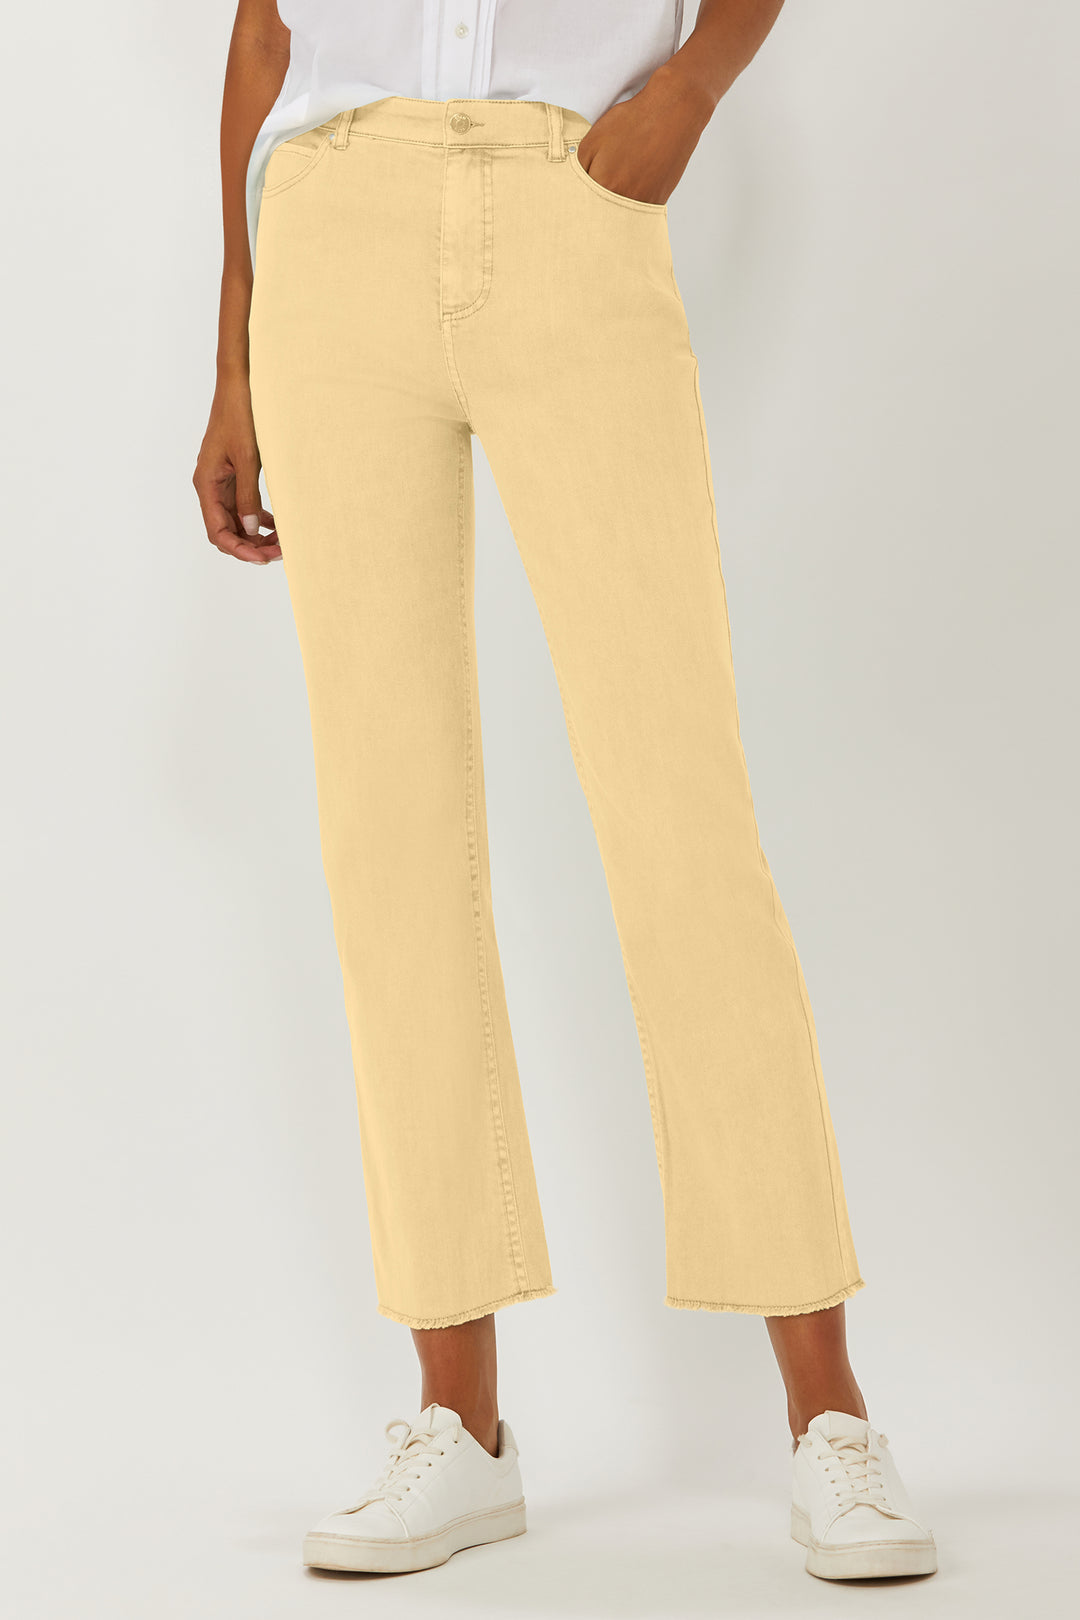 The New La Cienega Straight Leg Jean - Sunny Yellow